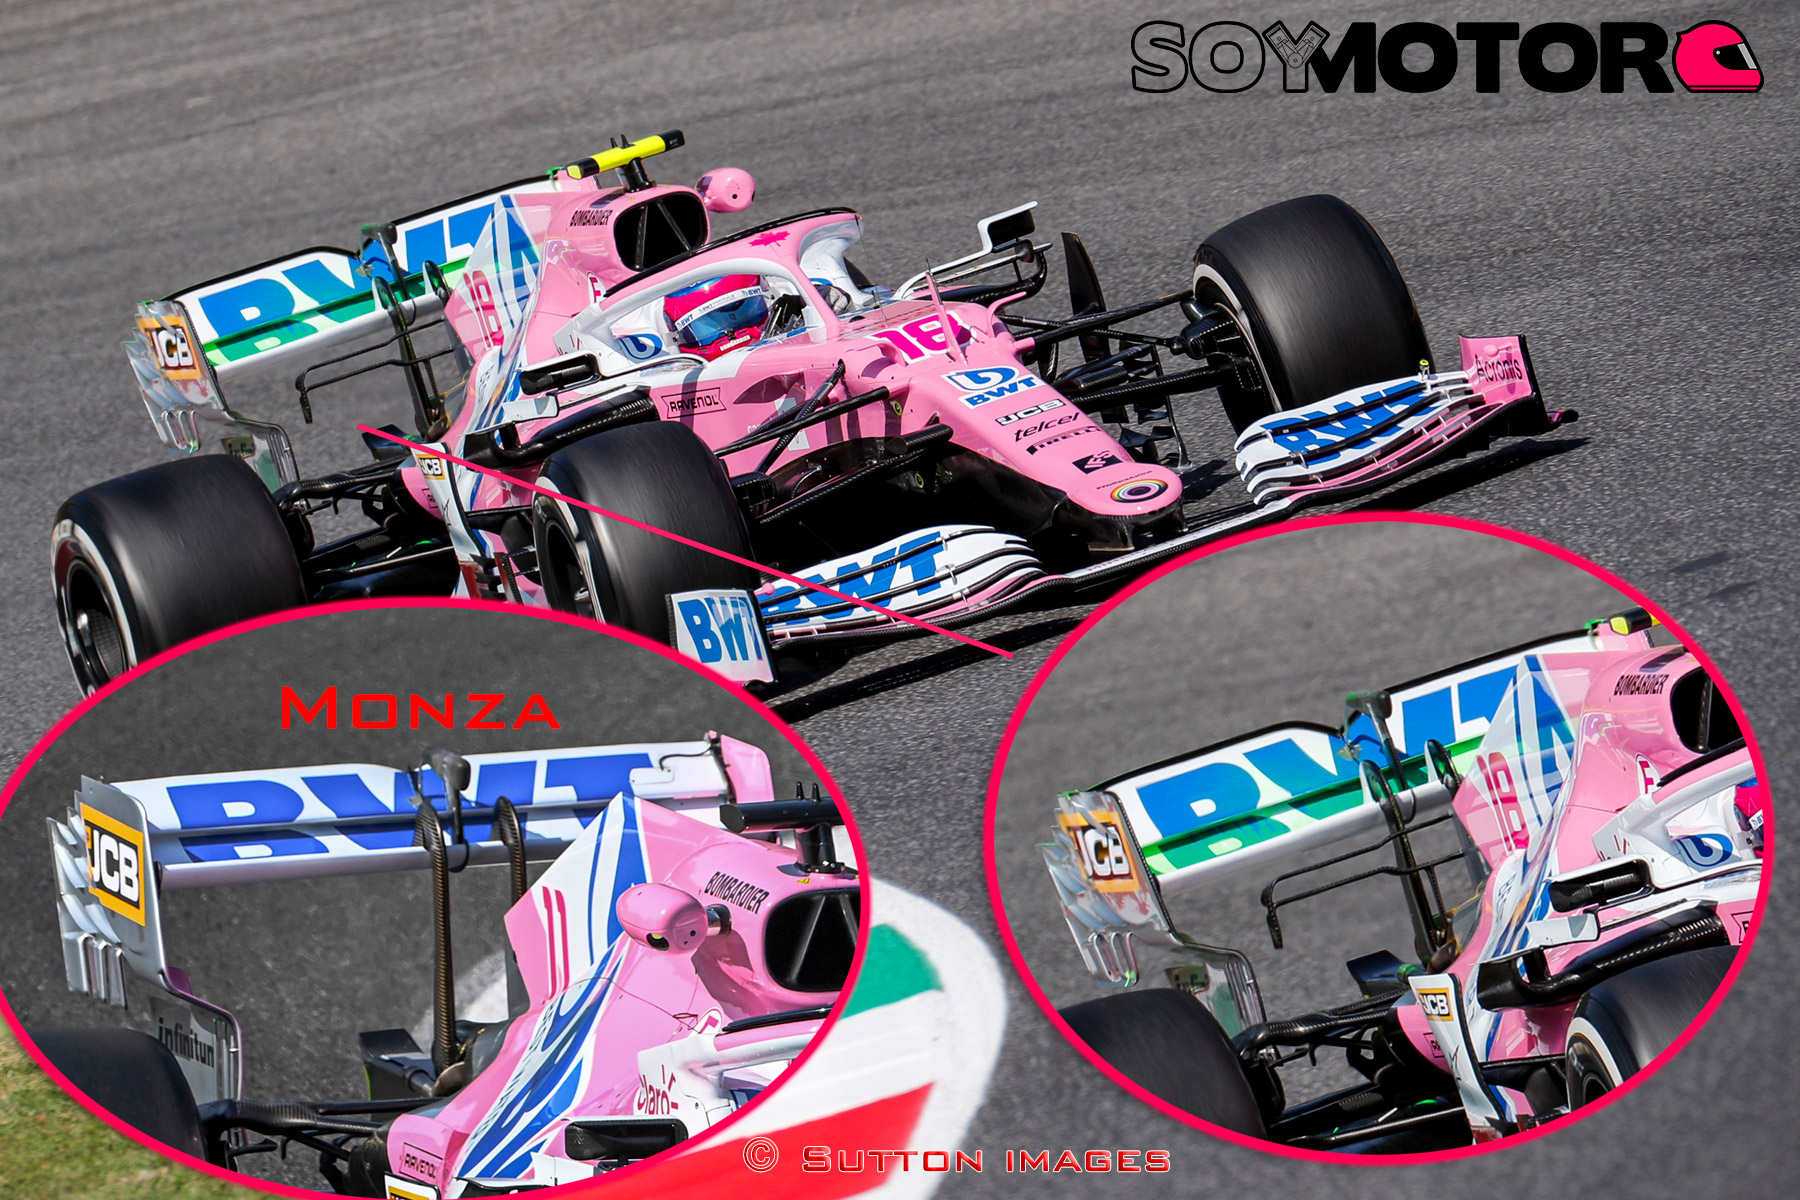 racing-point-config-trasera-soymotor.jpg